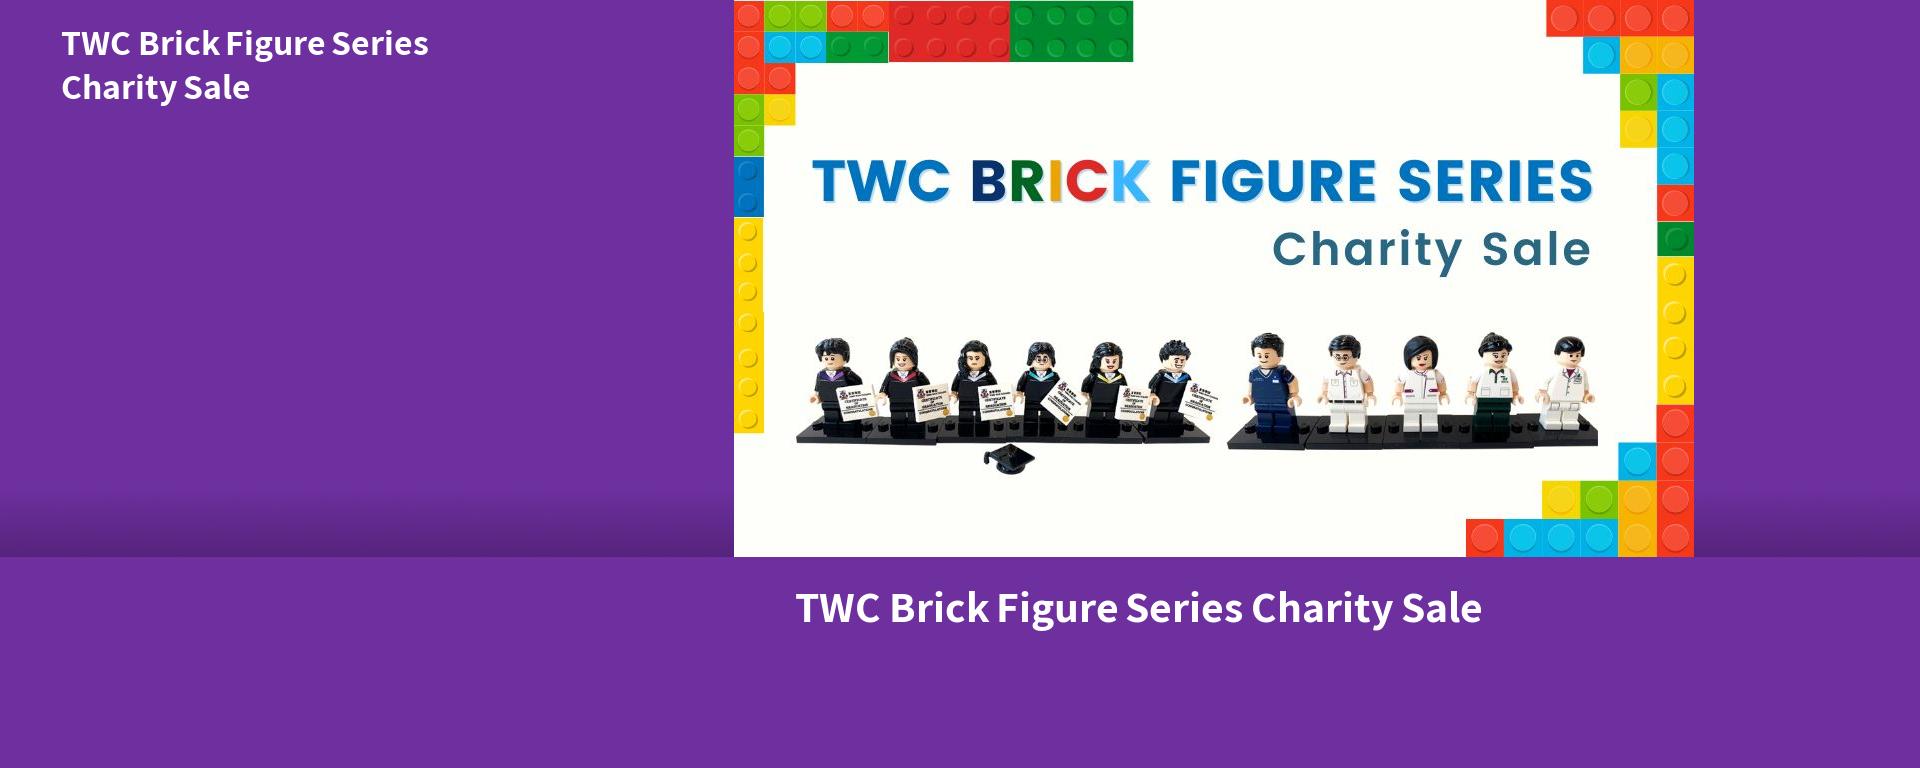 TWC Brick Figure Series Charity Sale